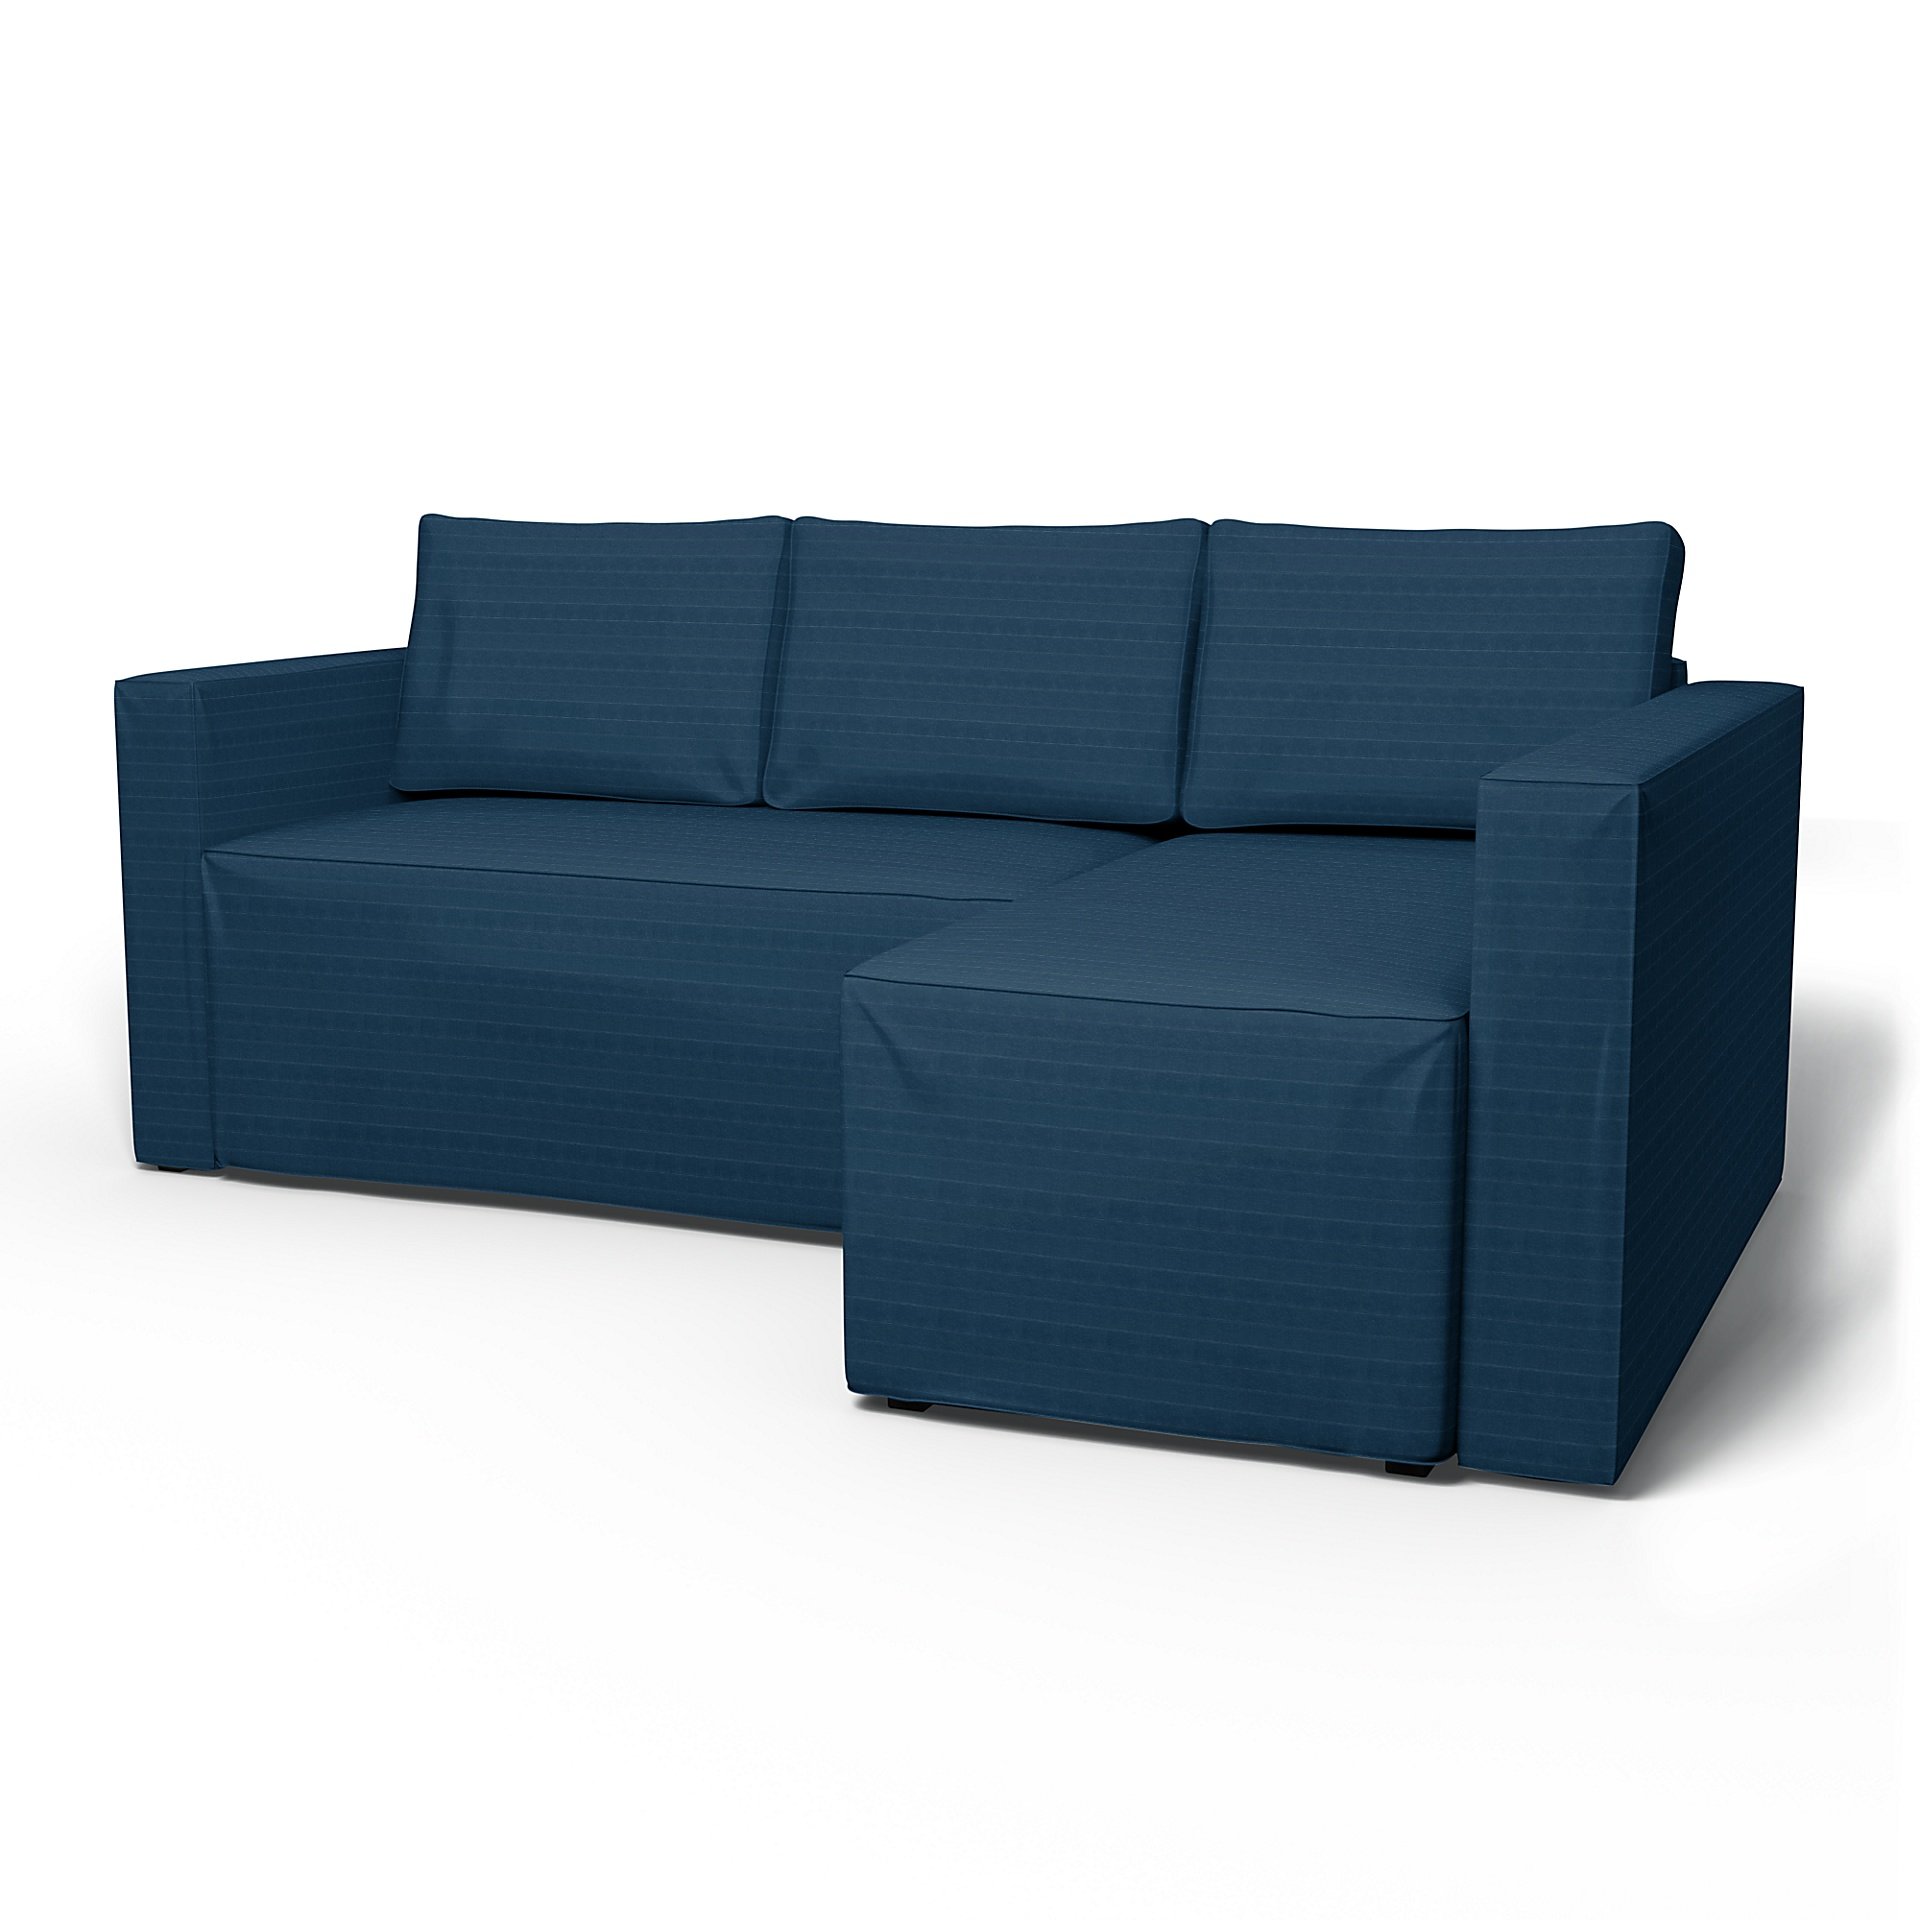 IKEA - Manstad Sofa Bed with Right Chaise Cover, Denim Blue, Velvet - Bemz